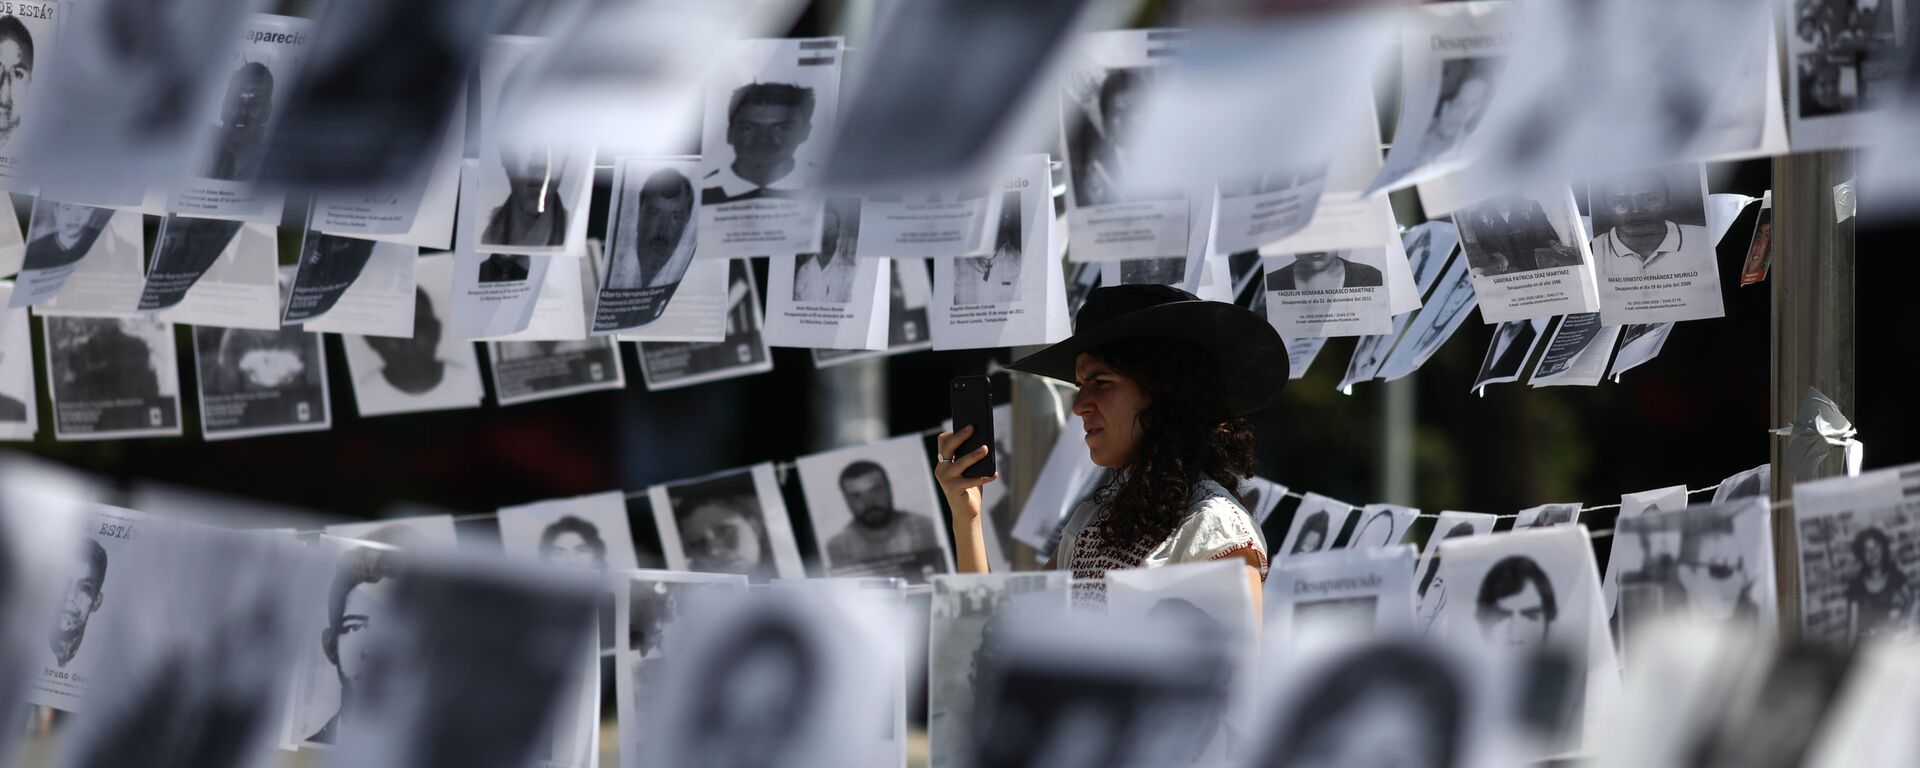 Fotos de desaparecidos en México (imagen referencial) - Sputnik Mundo, 1920, 08.04.2021